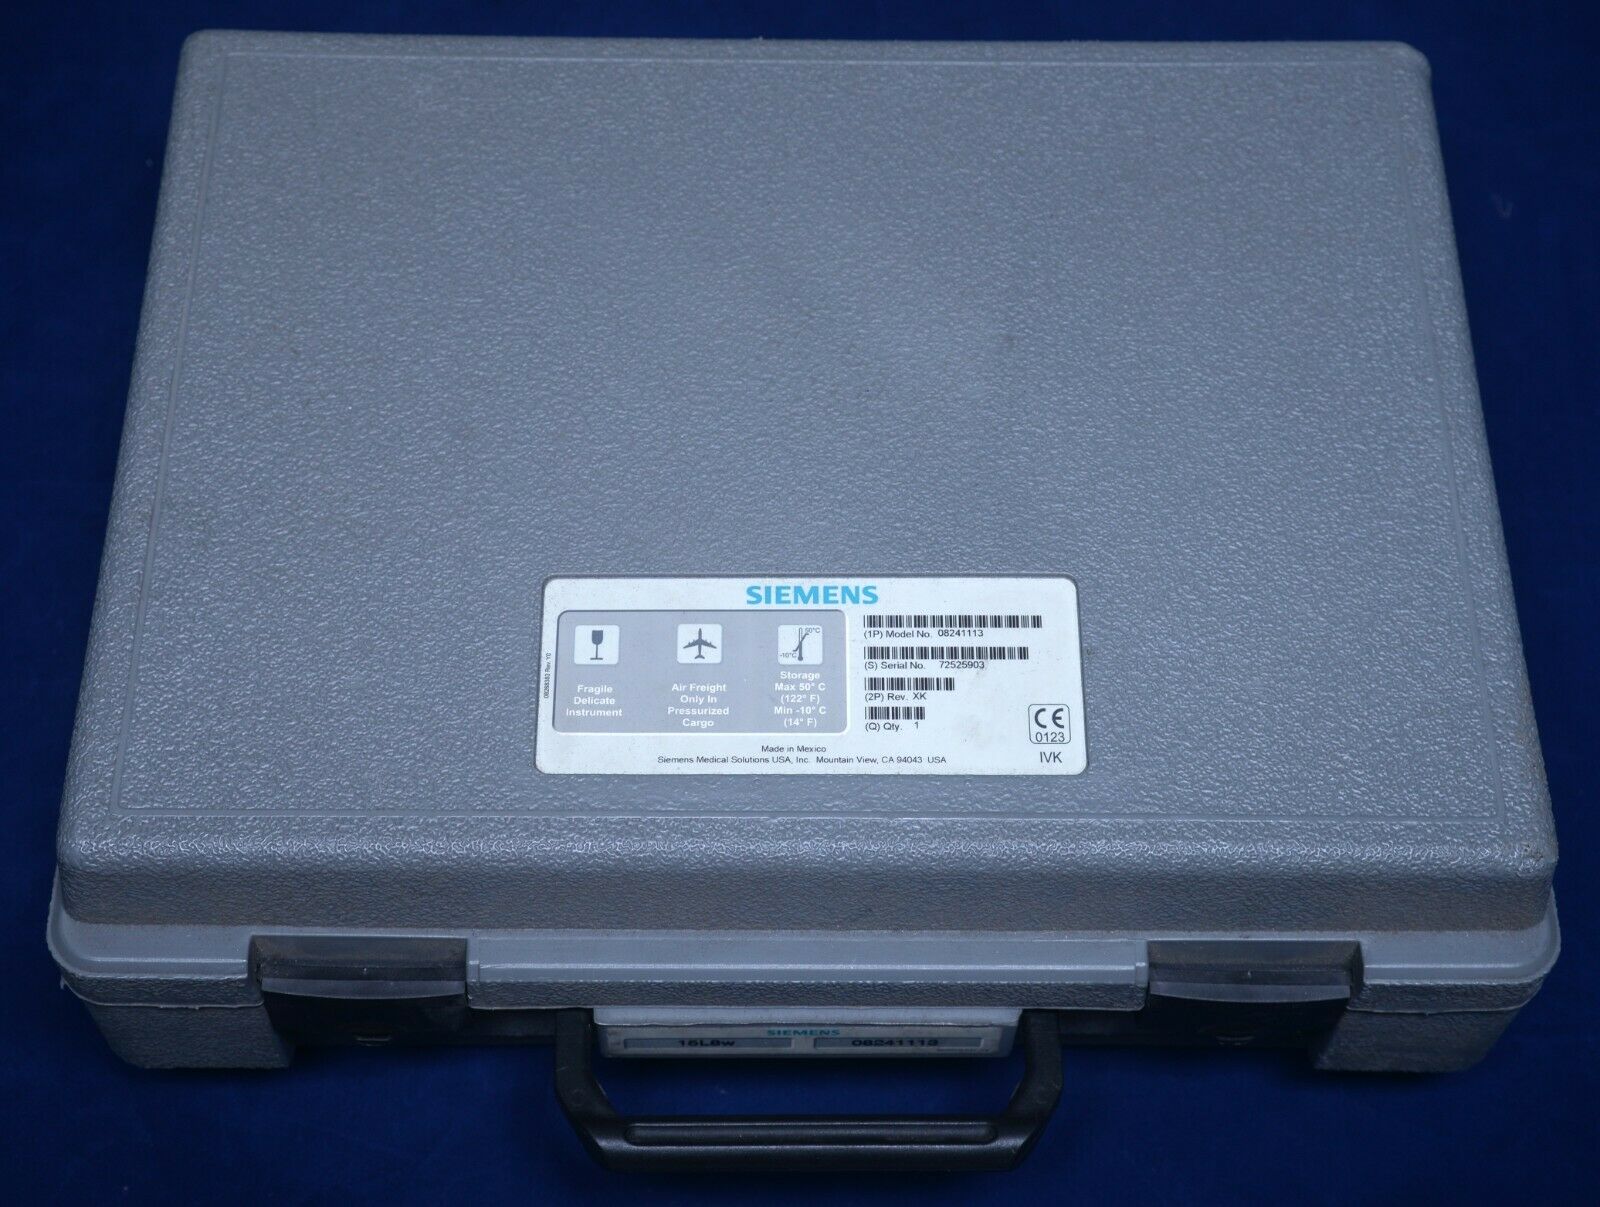 ACUSON 15L8w Linear Array Ultrasound Transducer Probe #08241113 Siemens w Case DIAGNOSTIC ULTRASOUND MACHINES FOR SALE